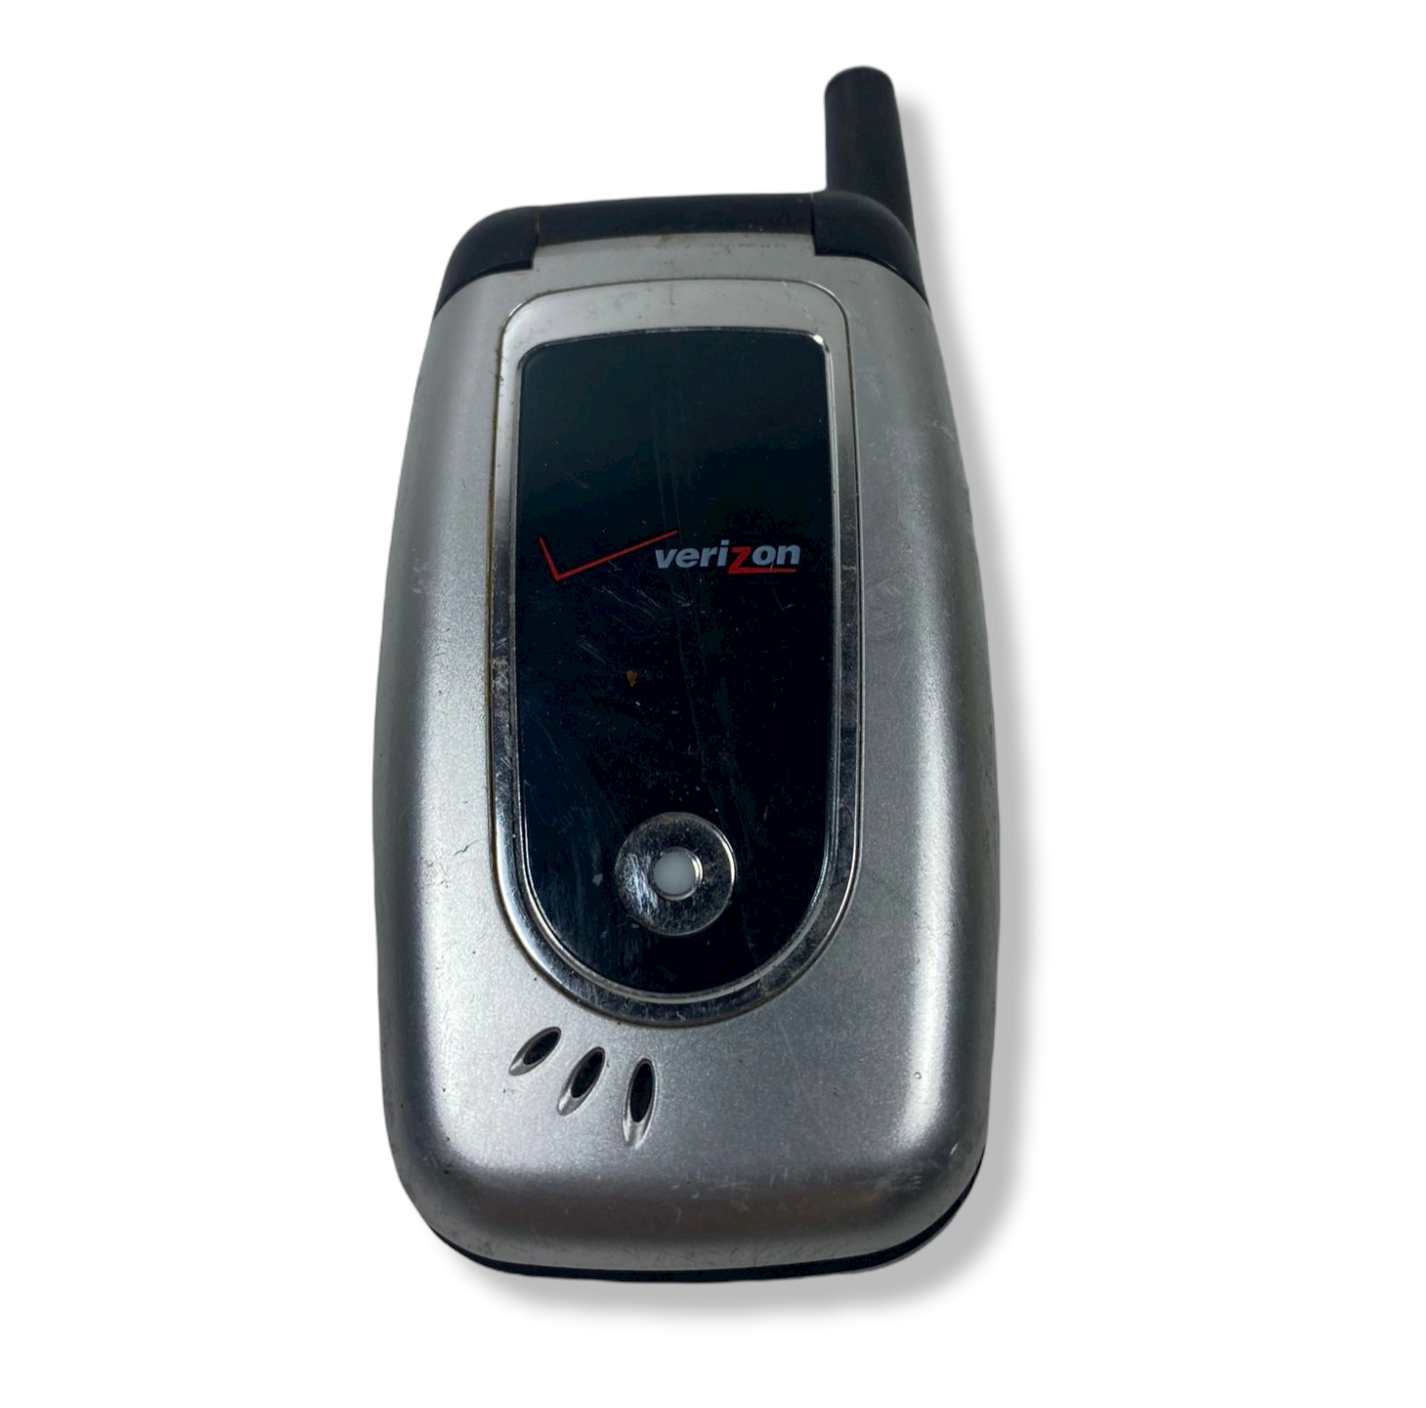 Pantech PN-210 - Silver/Black (Verizon) Cellular Phone - $15.83